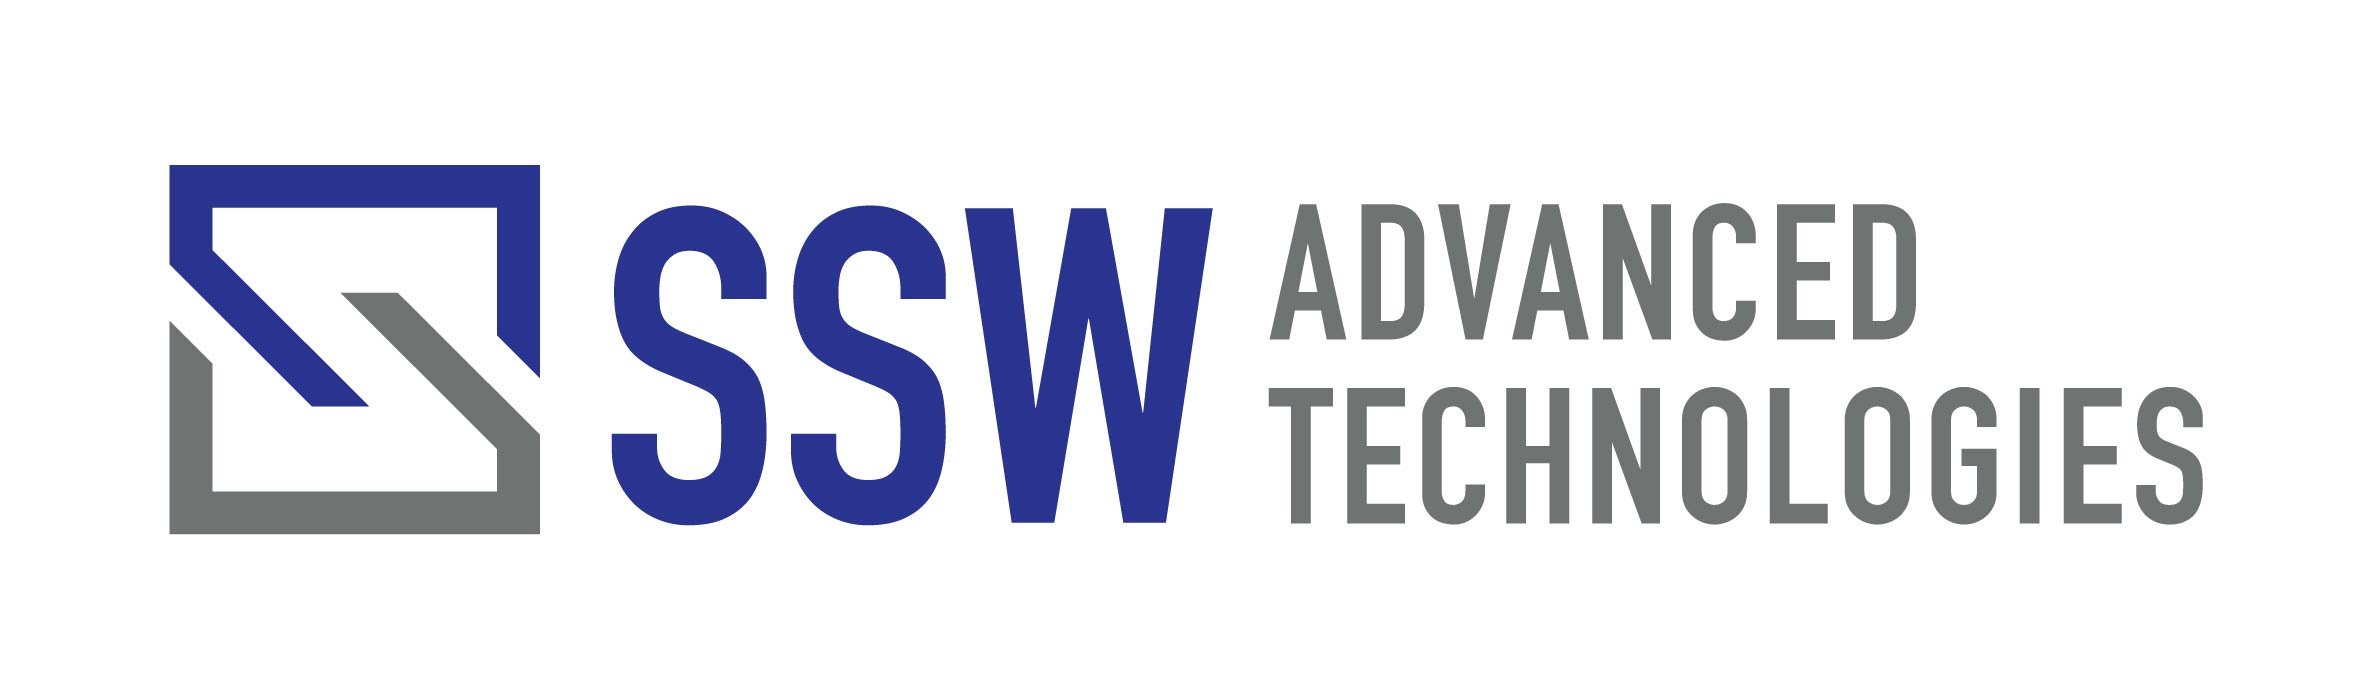 SSW Advanced Technologies